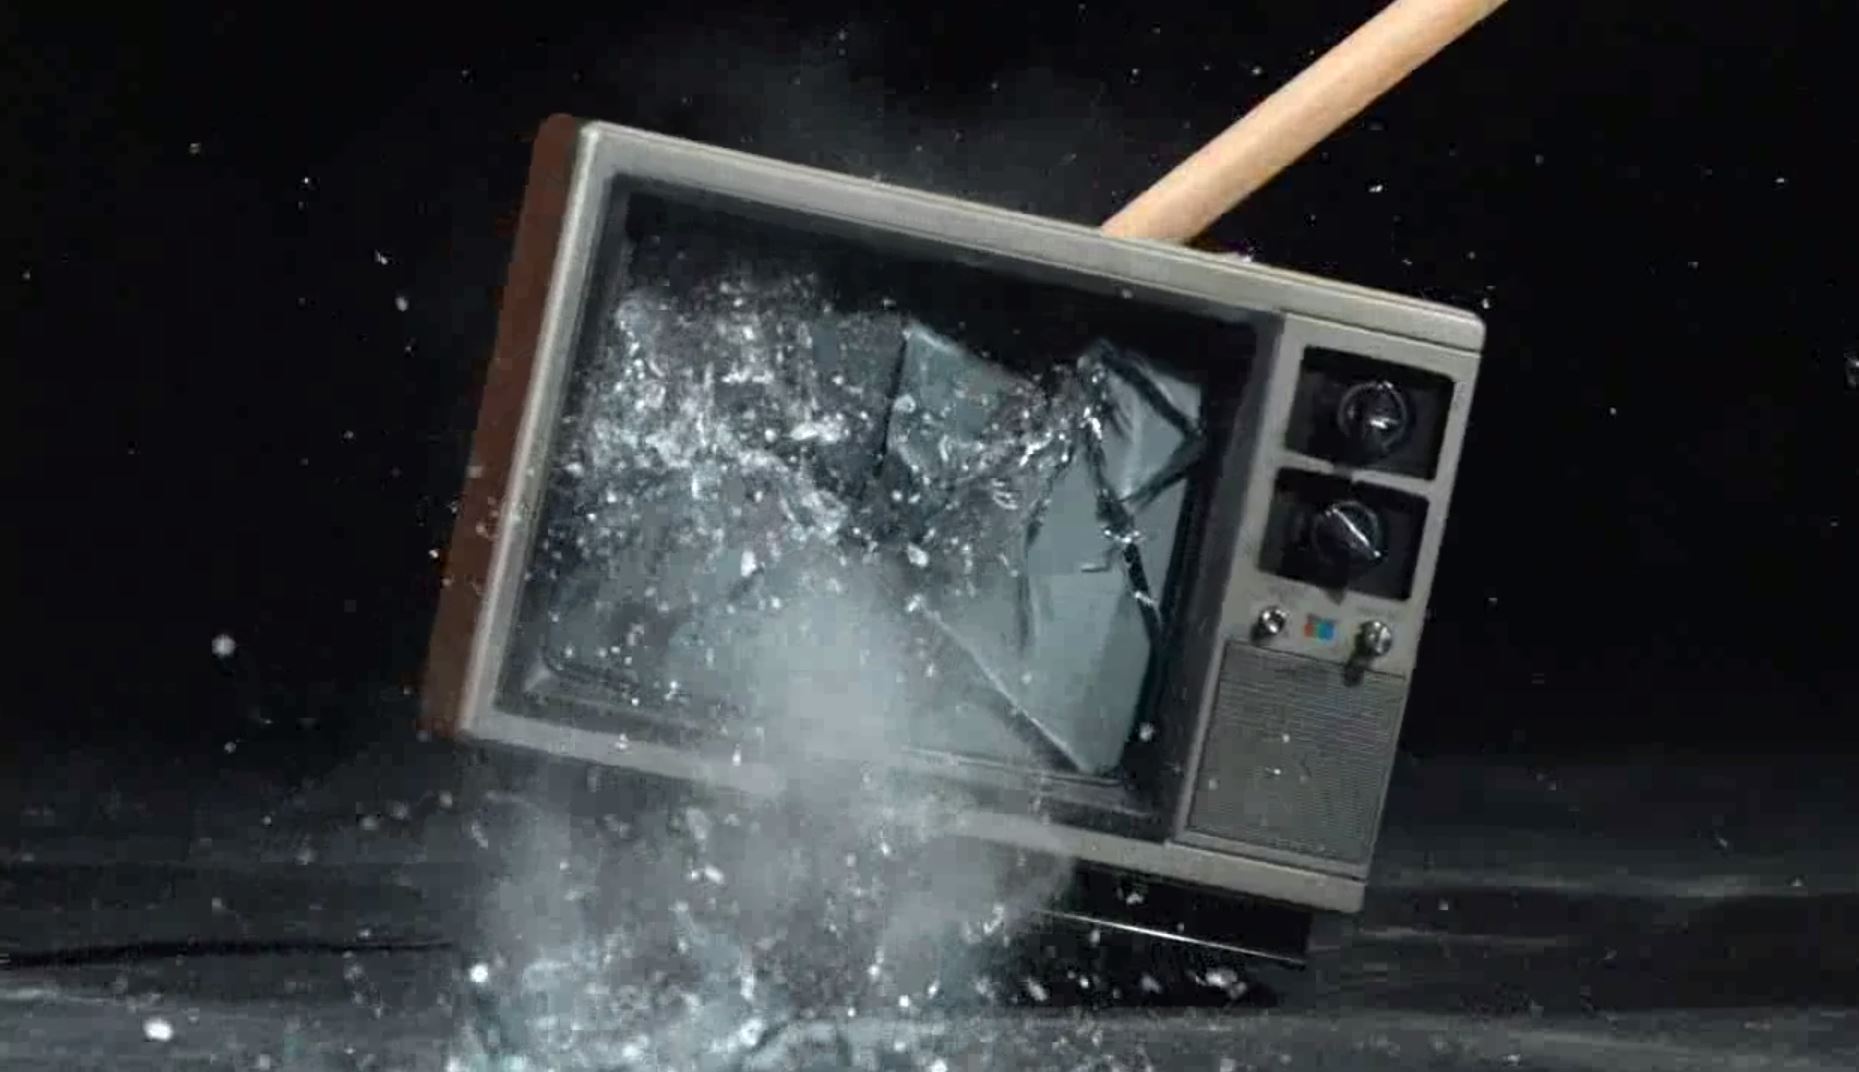 End of video. Сломанный телевизор. Фото сломанного телевизора. Футаж сломанный телевизор. Сломанный телевизор в музыкальном клипе.